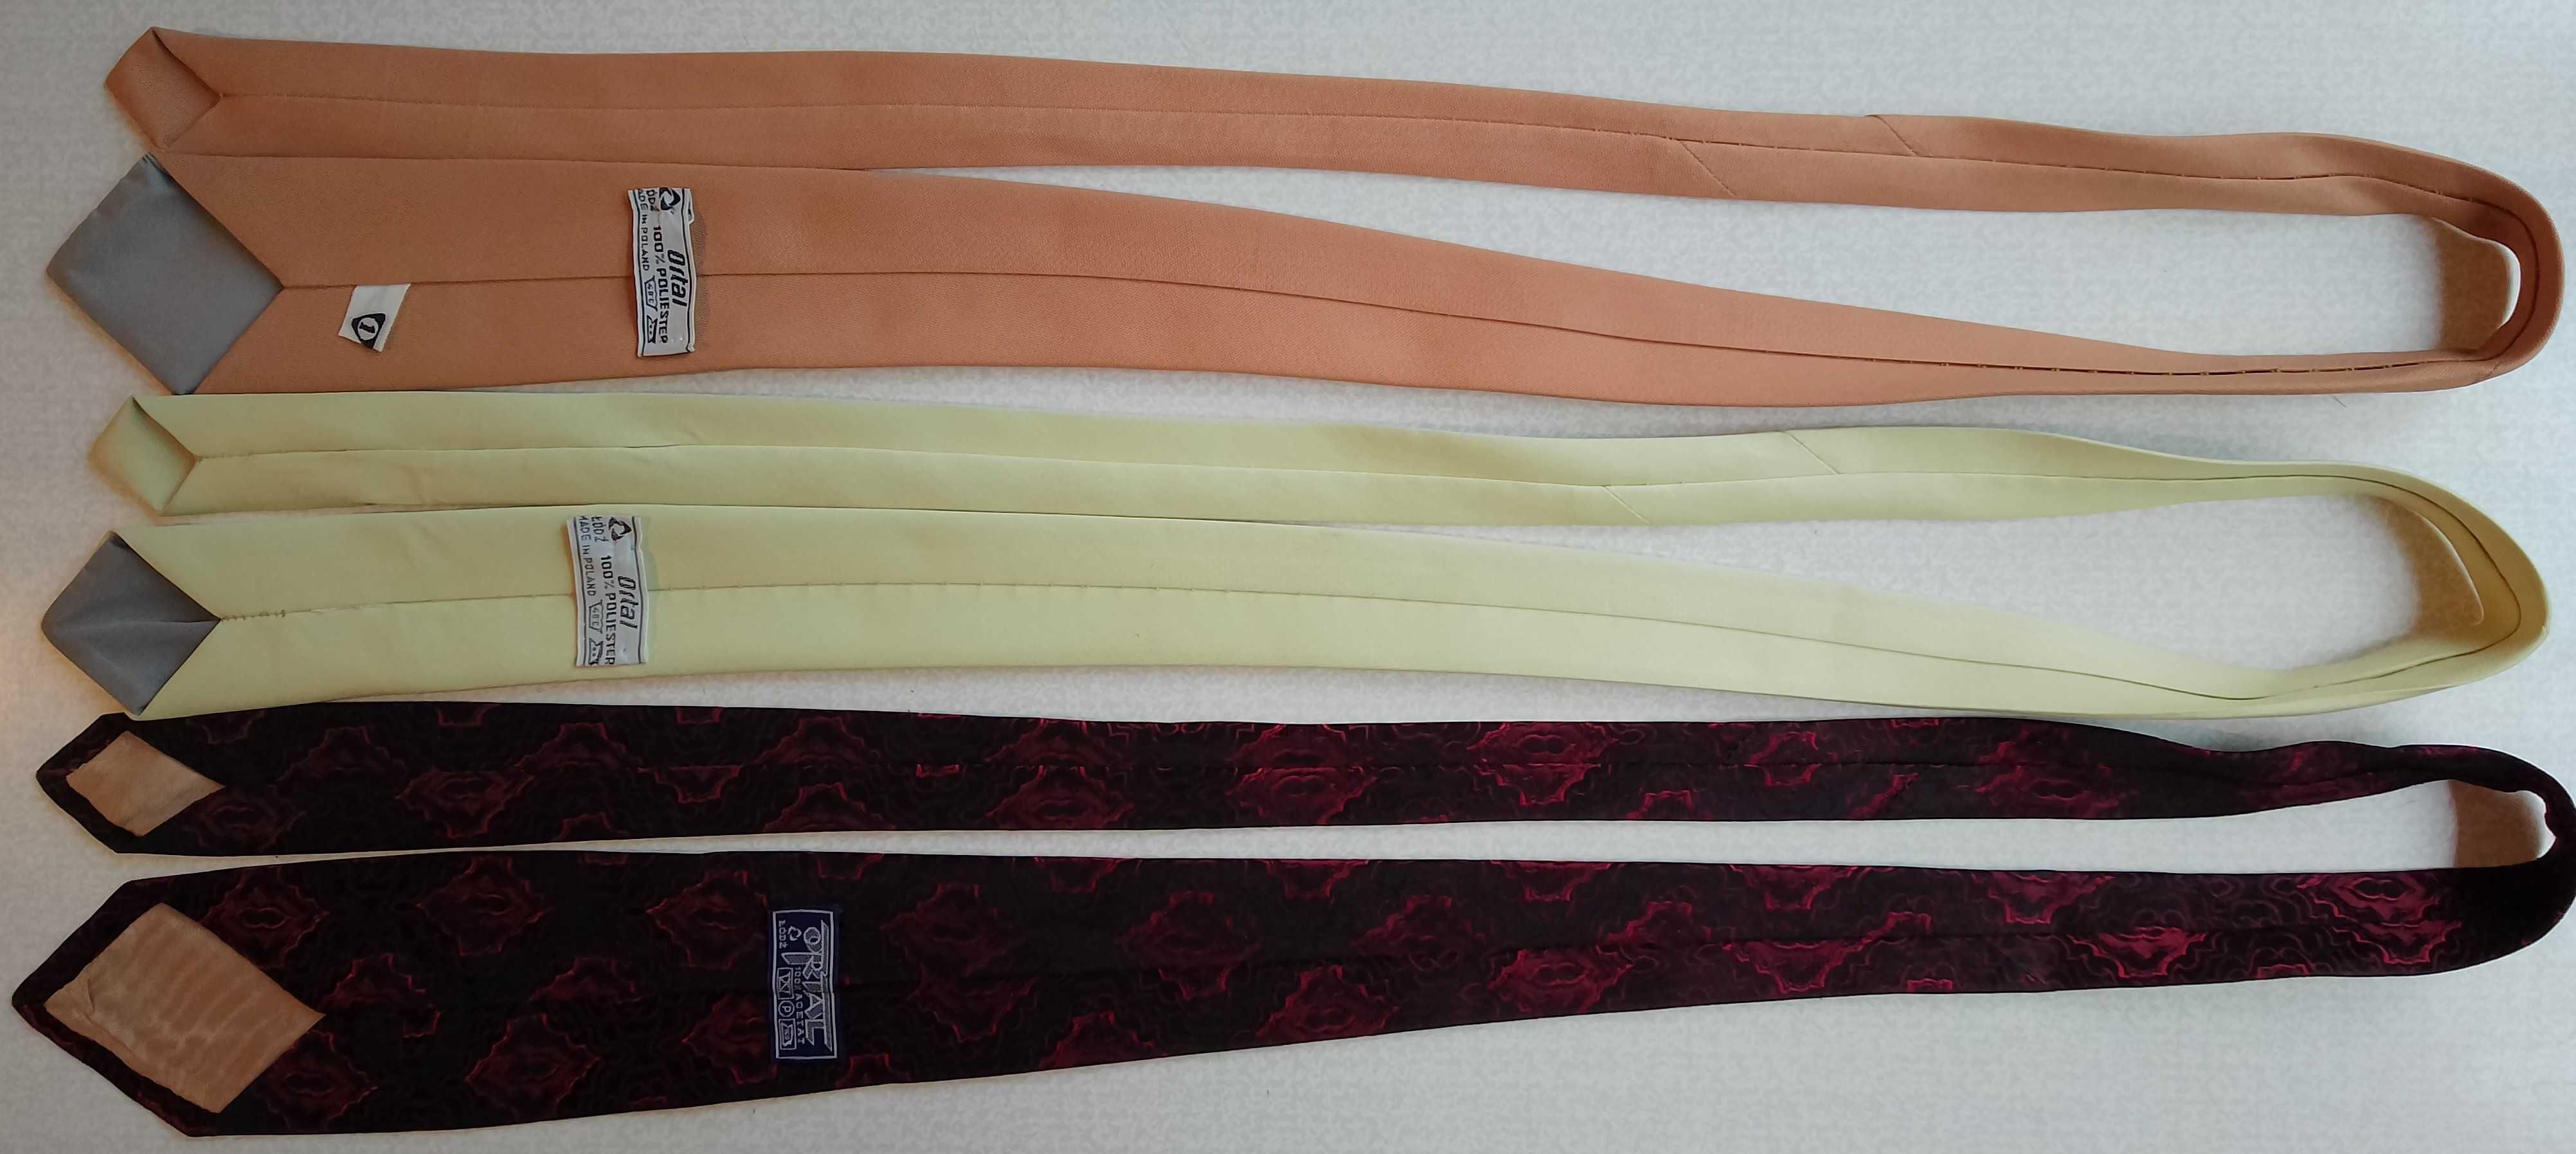 krawat męski starego typu: Ortal lub ZPJ lub Linosair lub bez nazwy